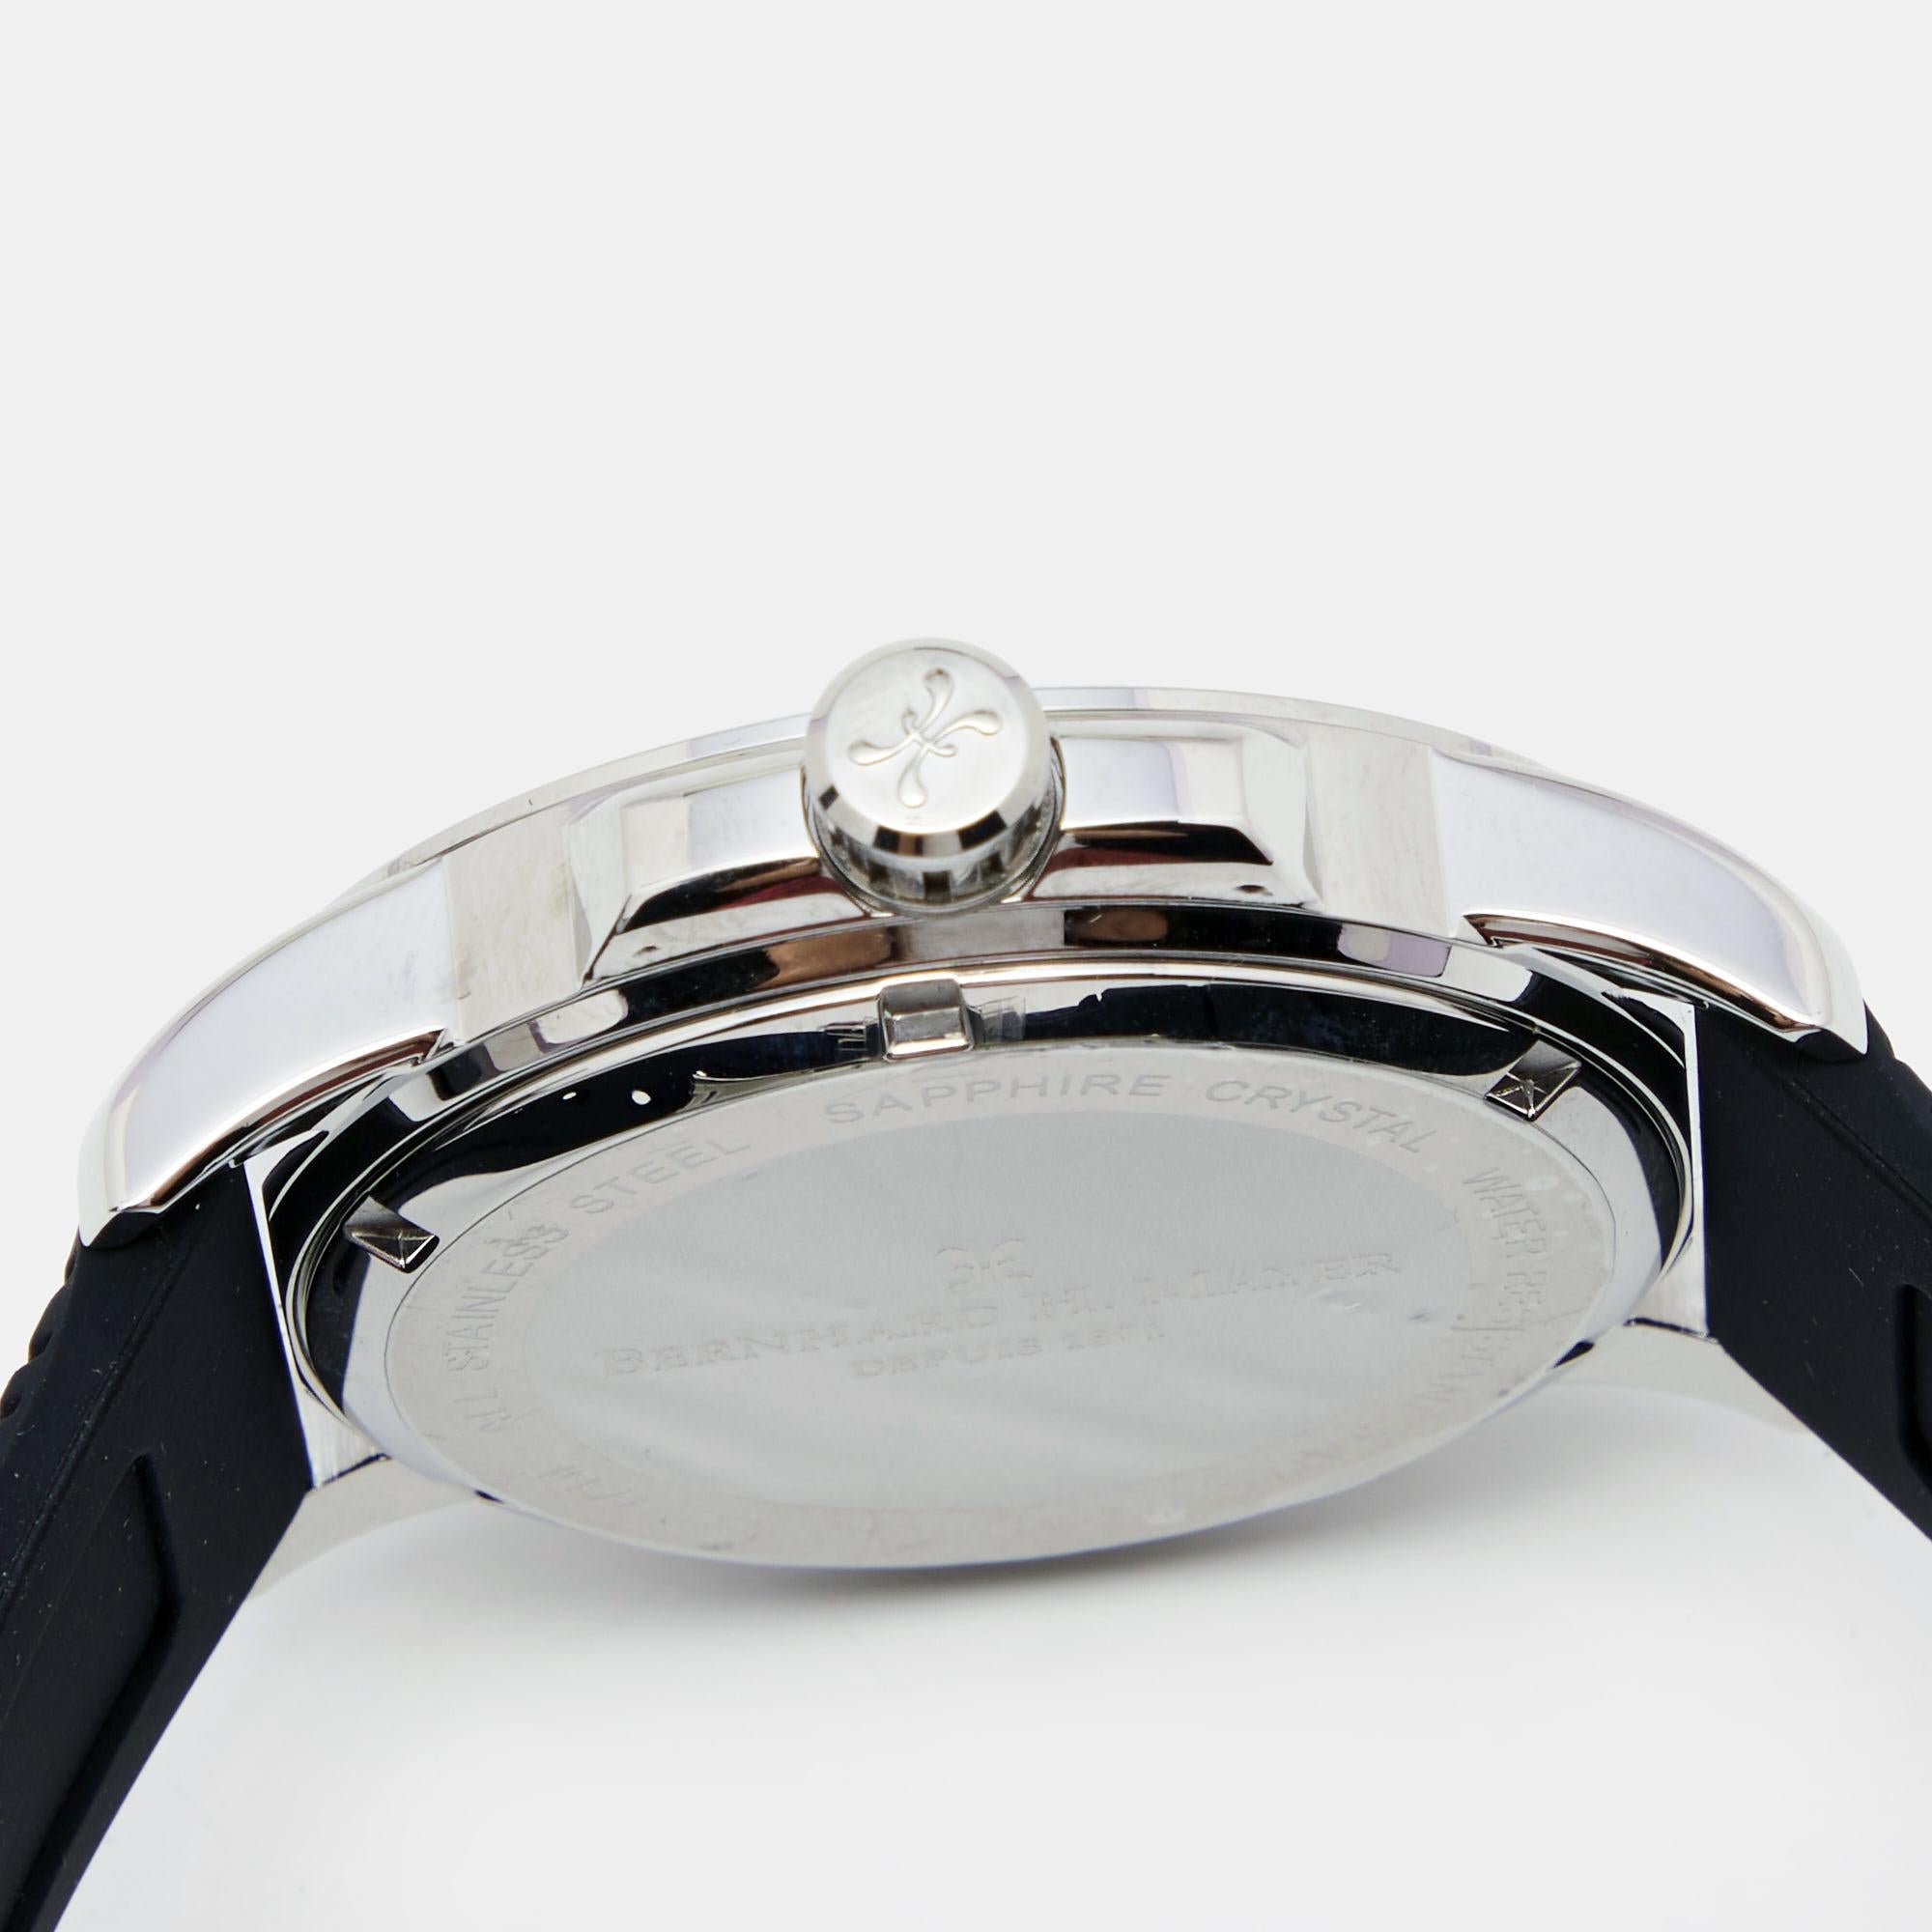 Contemporary Bernhard H. Mayer Blue Stainless Steel Black Silicon Drift Men's Wristwatch 44mm